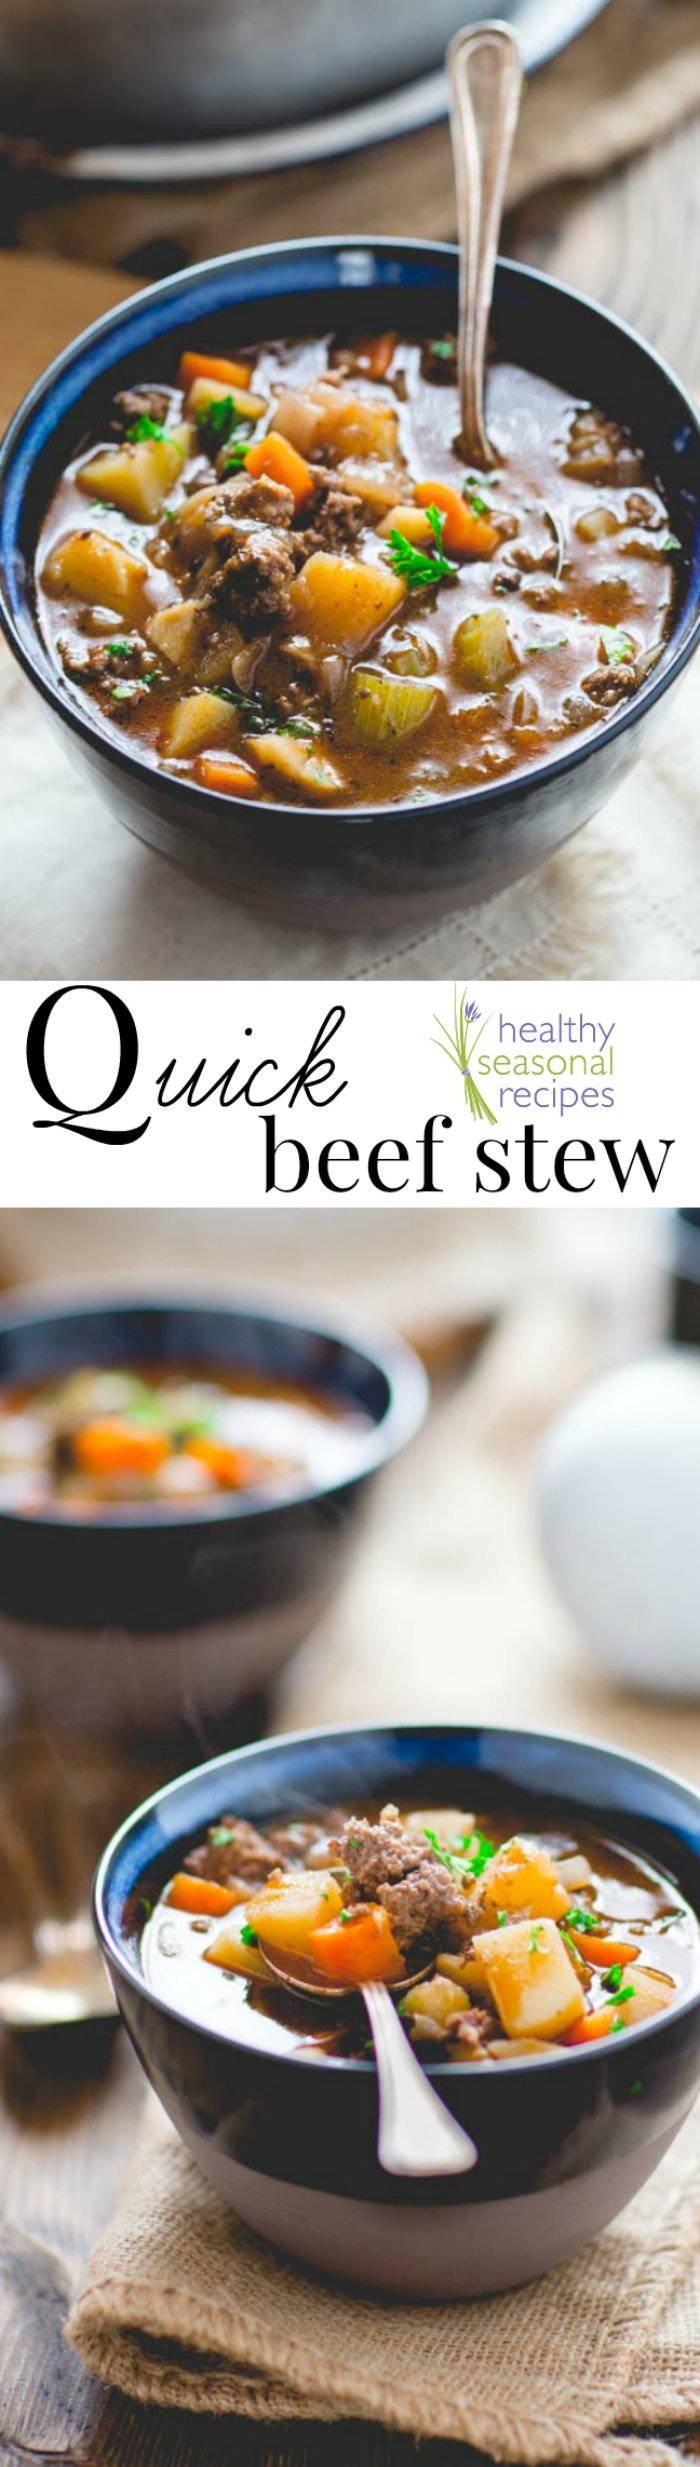 Healthy Beef Stew Recipe Slow Cooker
 heart healthy beef stew slow cooker